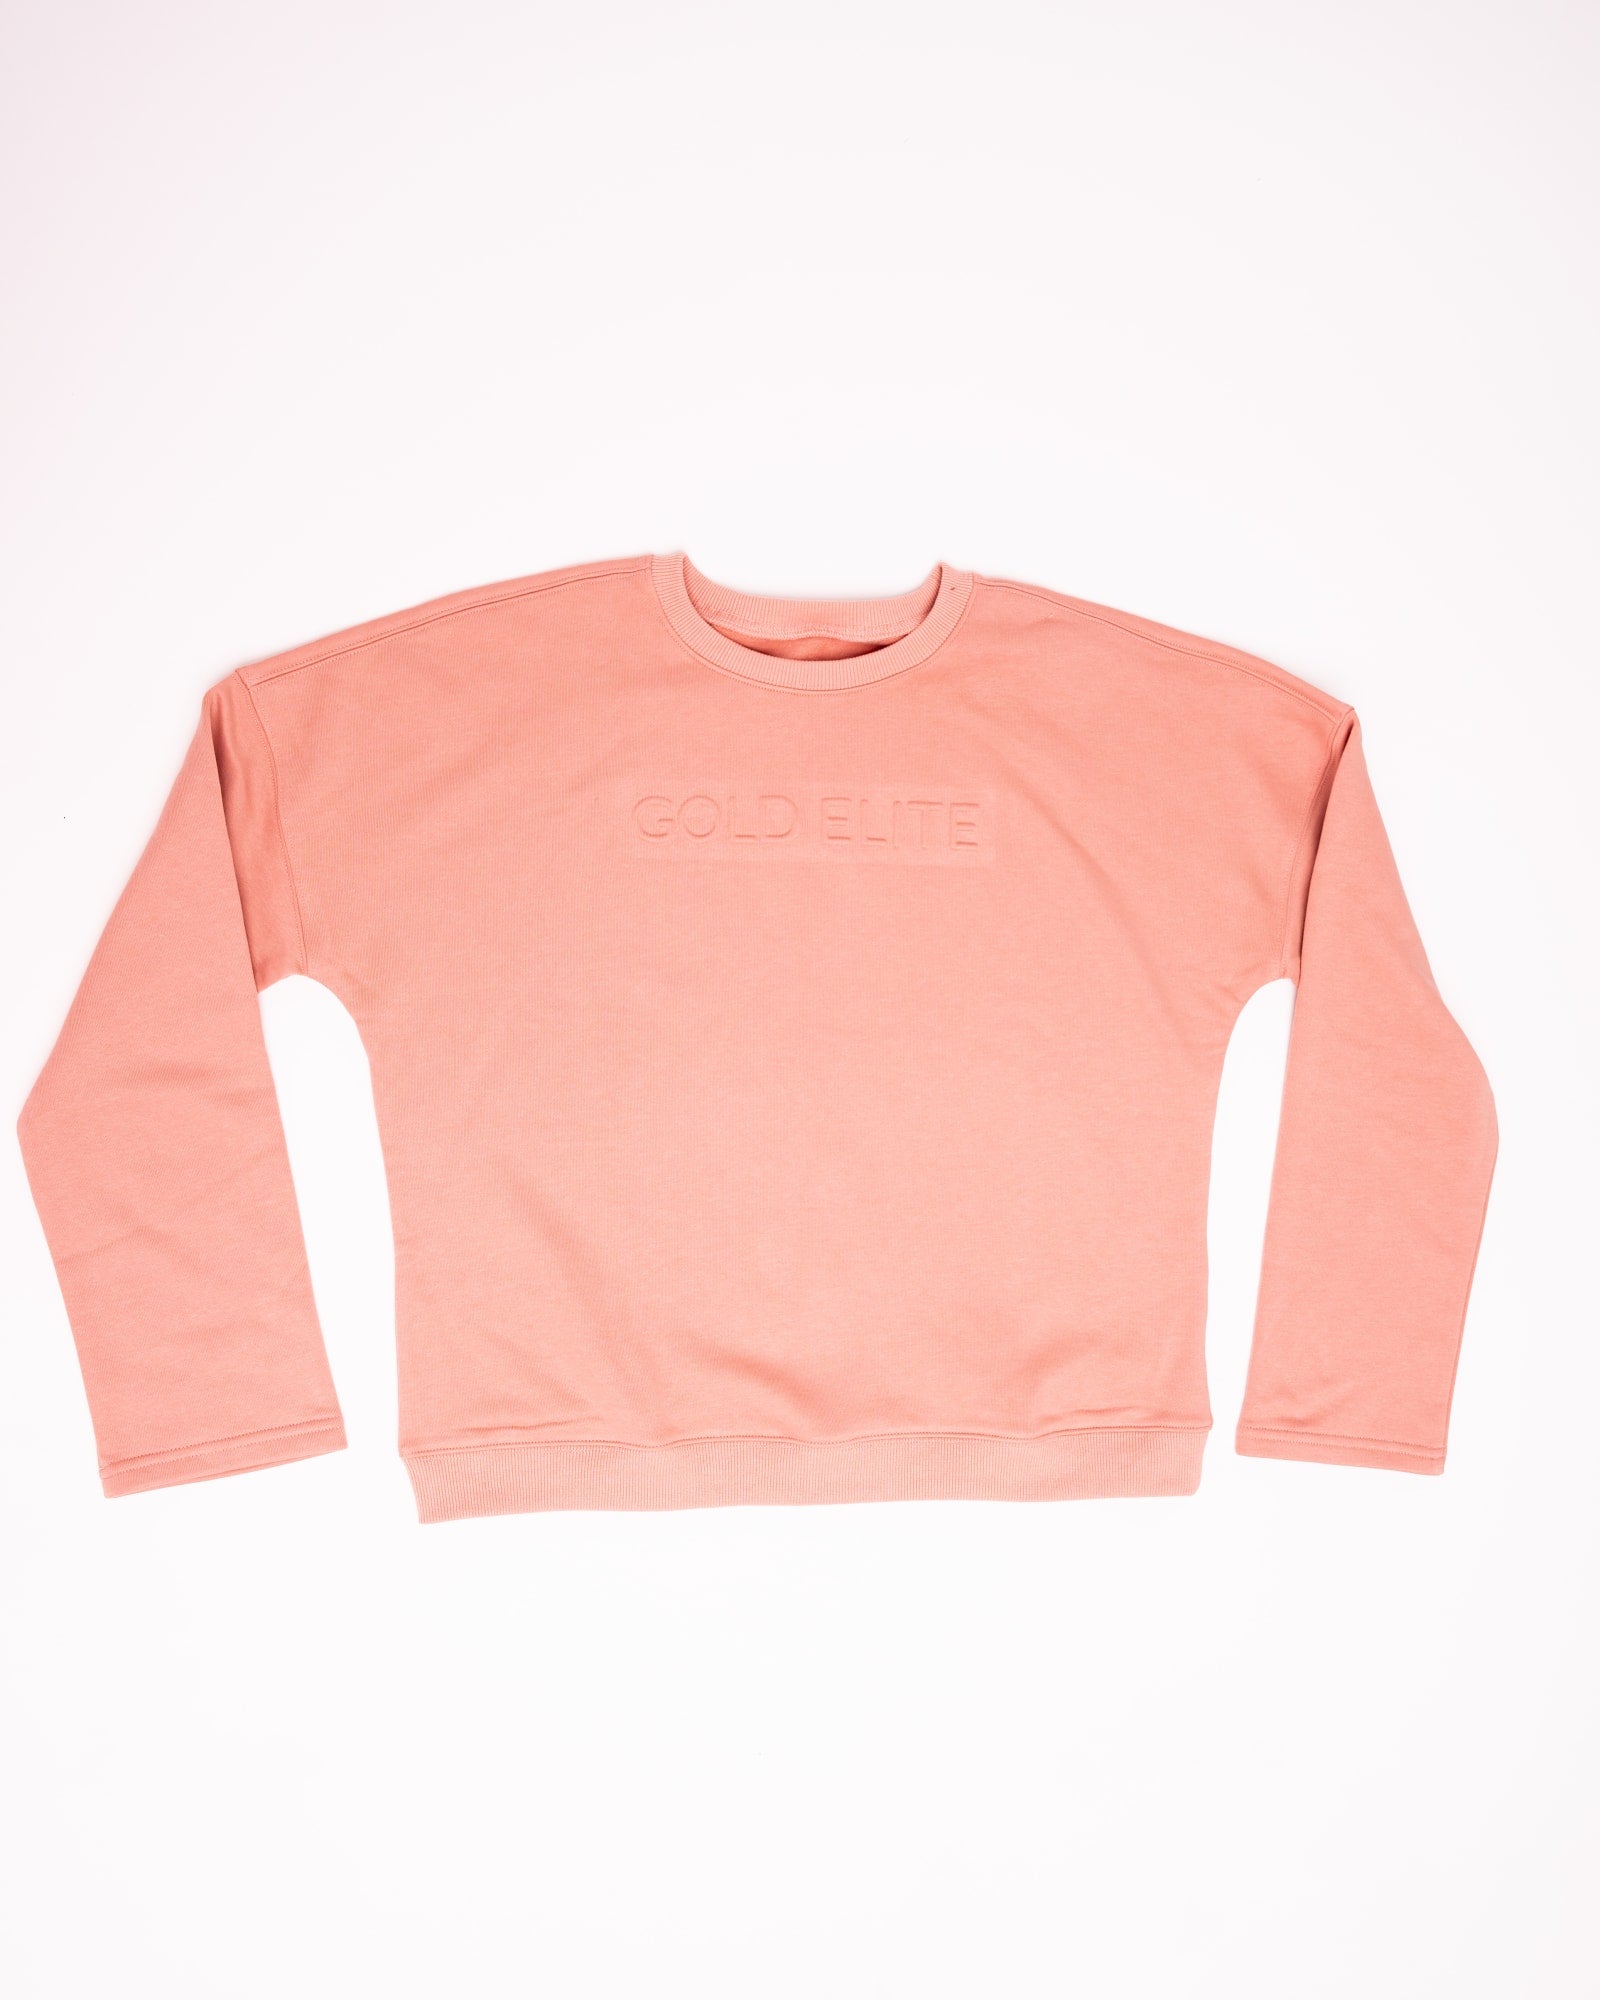 GOLD ELITE Crewneck Sweater | Burnt Coral